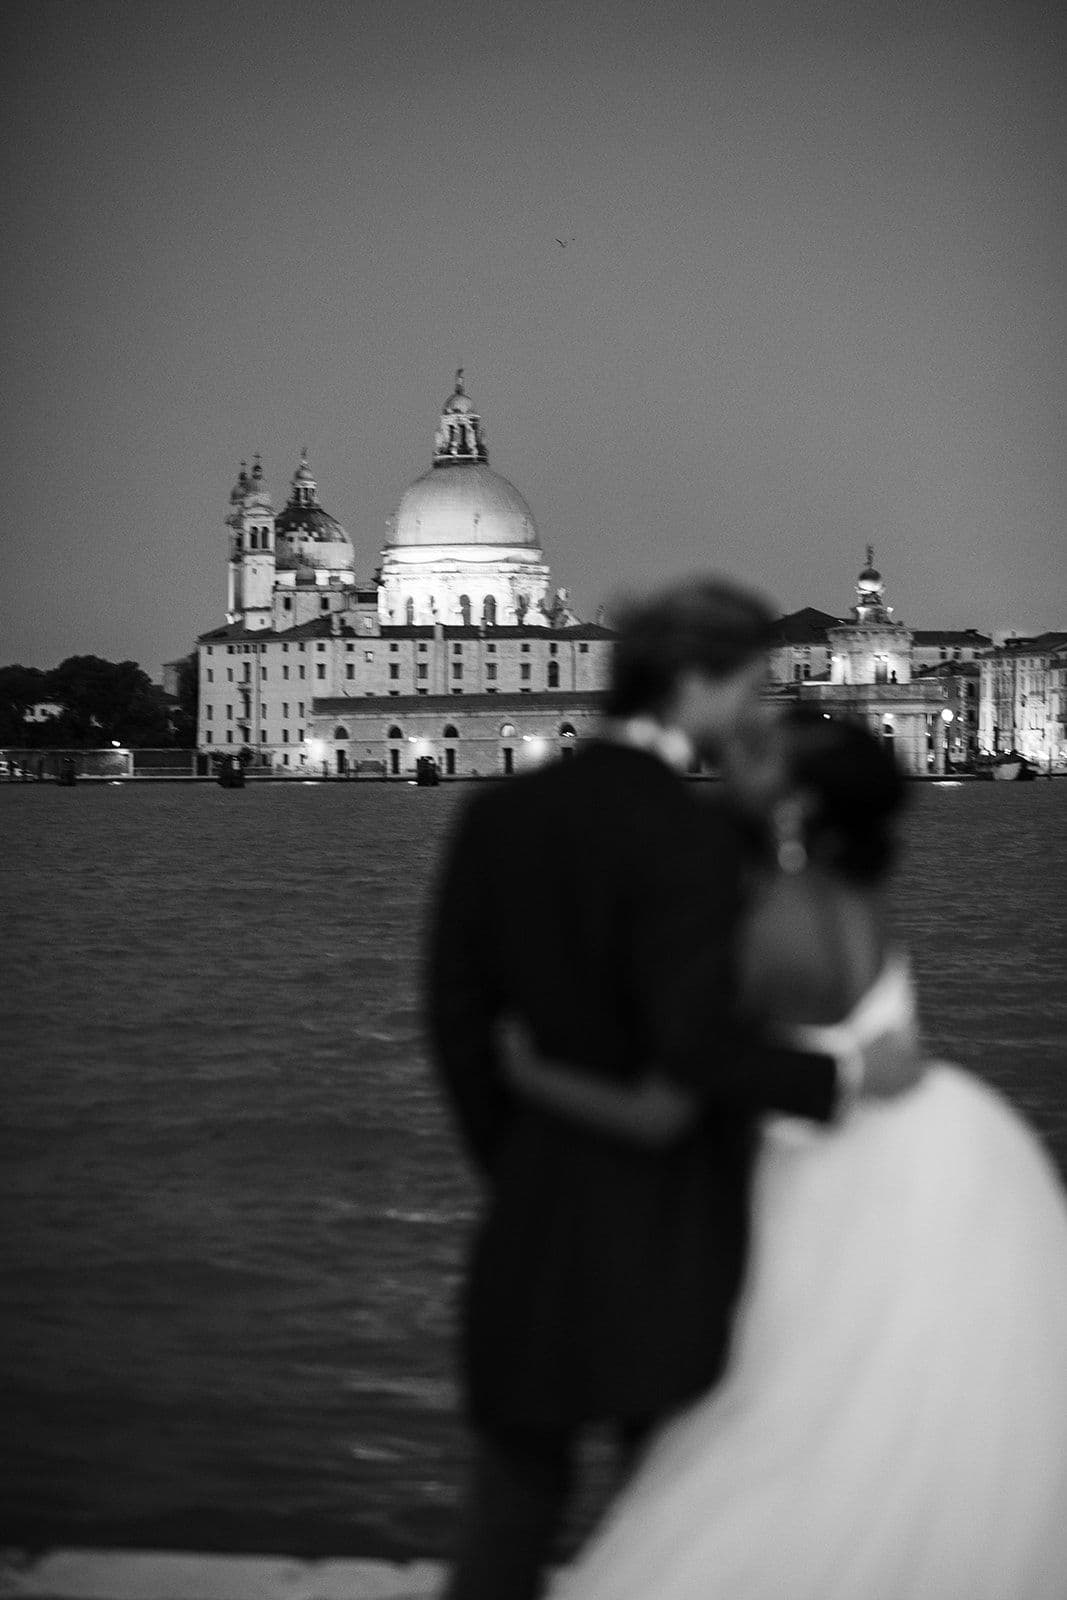 Venetian Rendezvous Venice wedding photographer